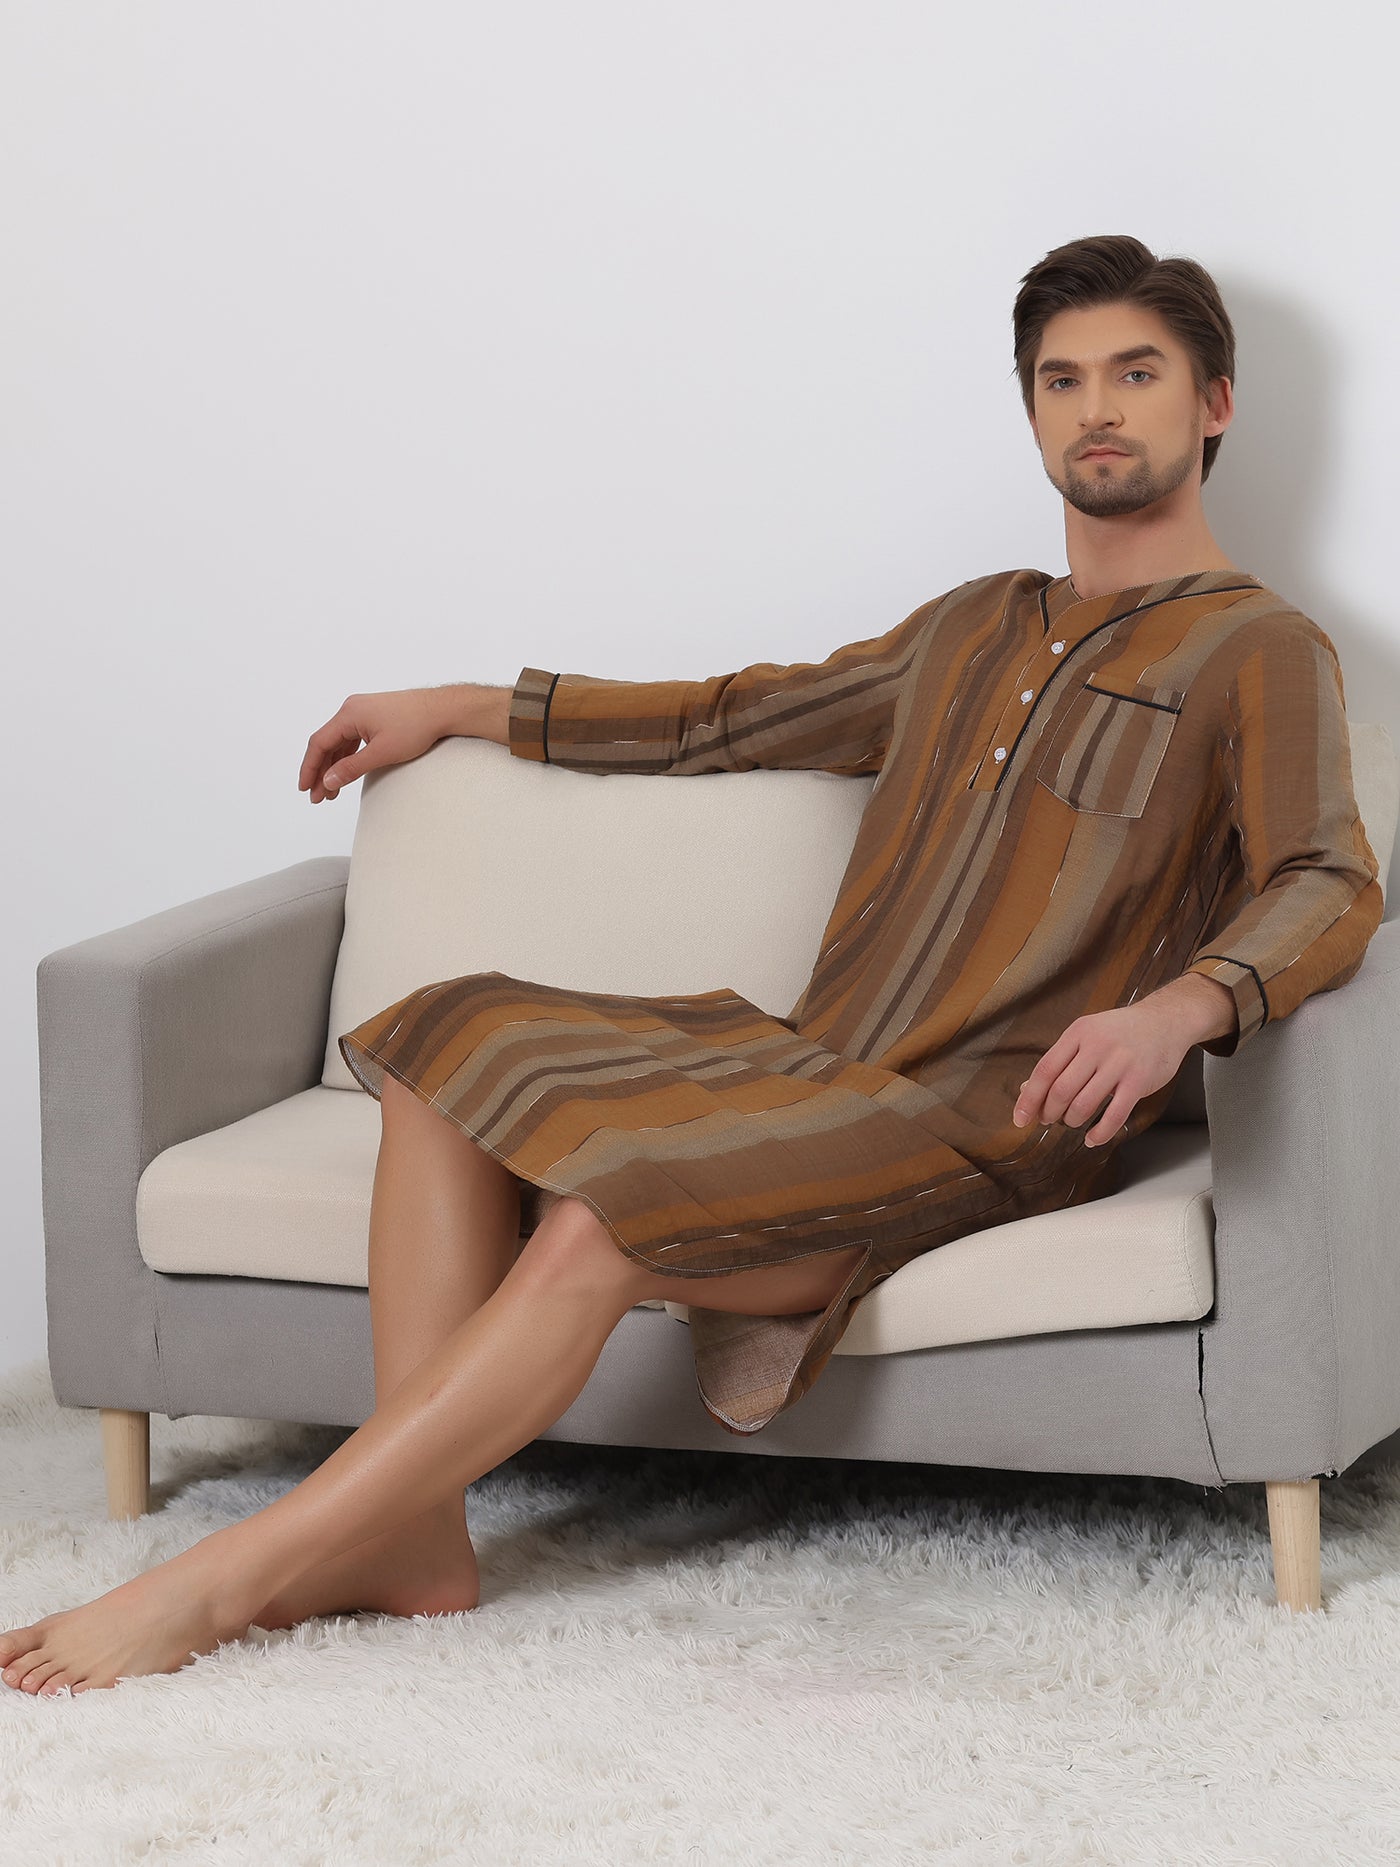 Bublédon Striped Print Nightgown for Men's V-Neck Button Long Sleeves Nightshirt Sleep Shirt